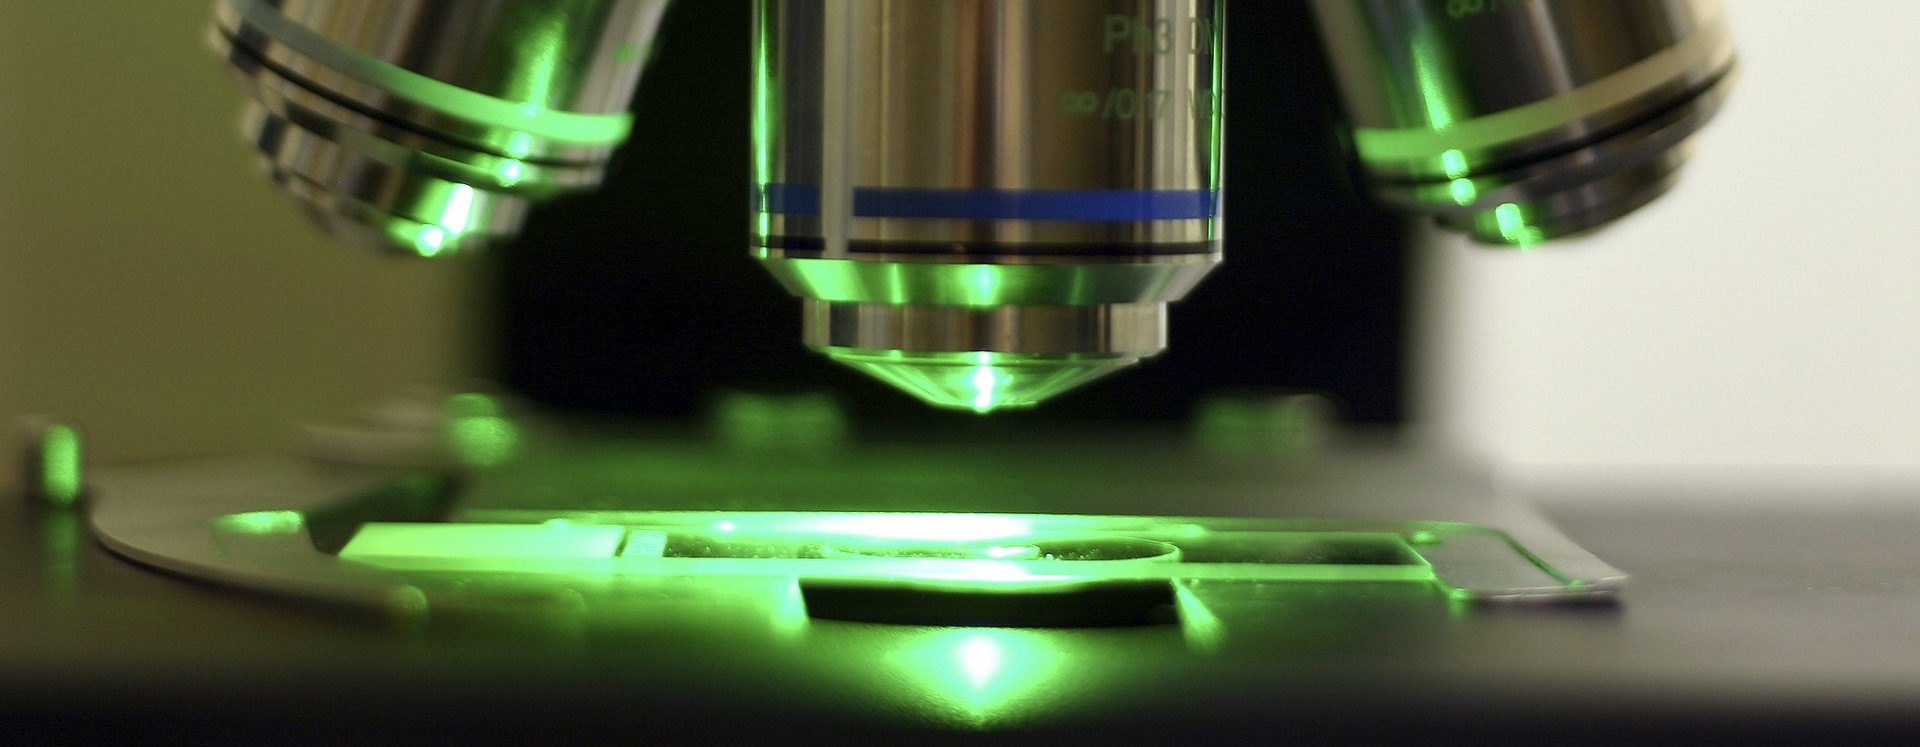 Application DPSS laser Raman spectroscopy micro lithogarphy